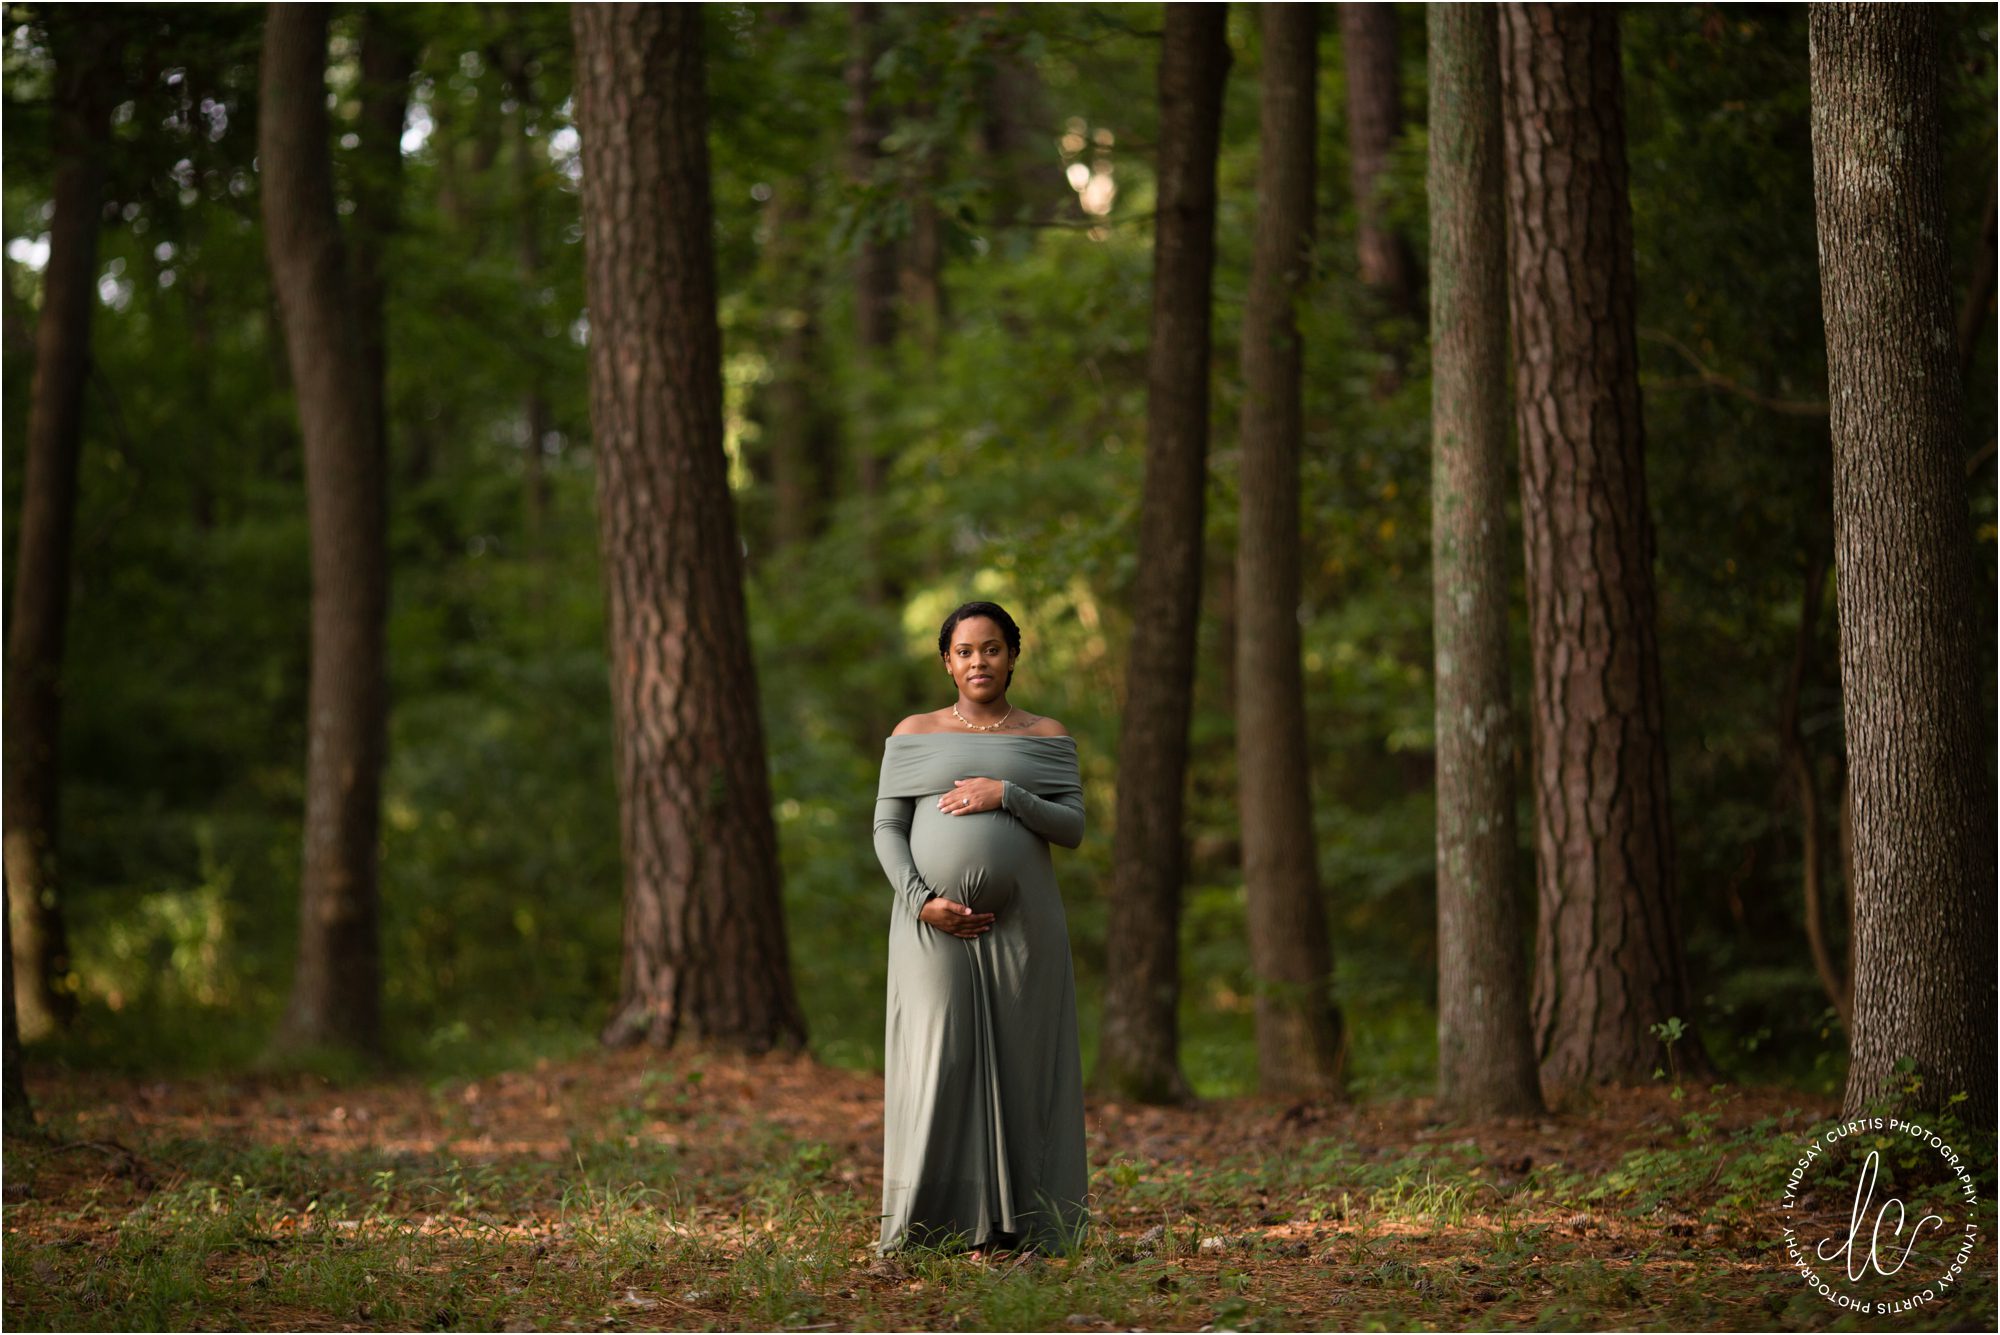 Maternity Portraits in wooded area. Lyndsay Curtis Photography www.lyndsaycurtis.com